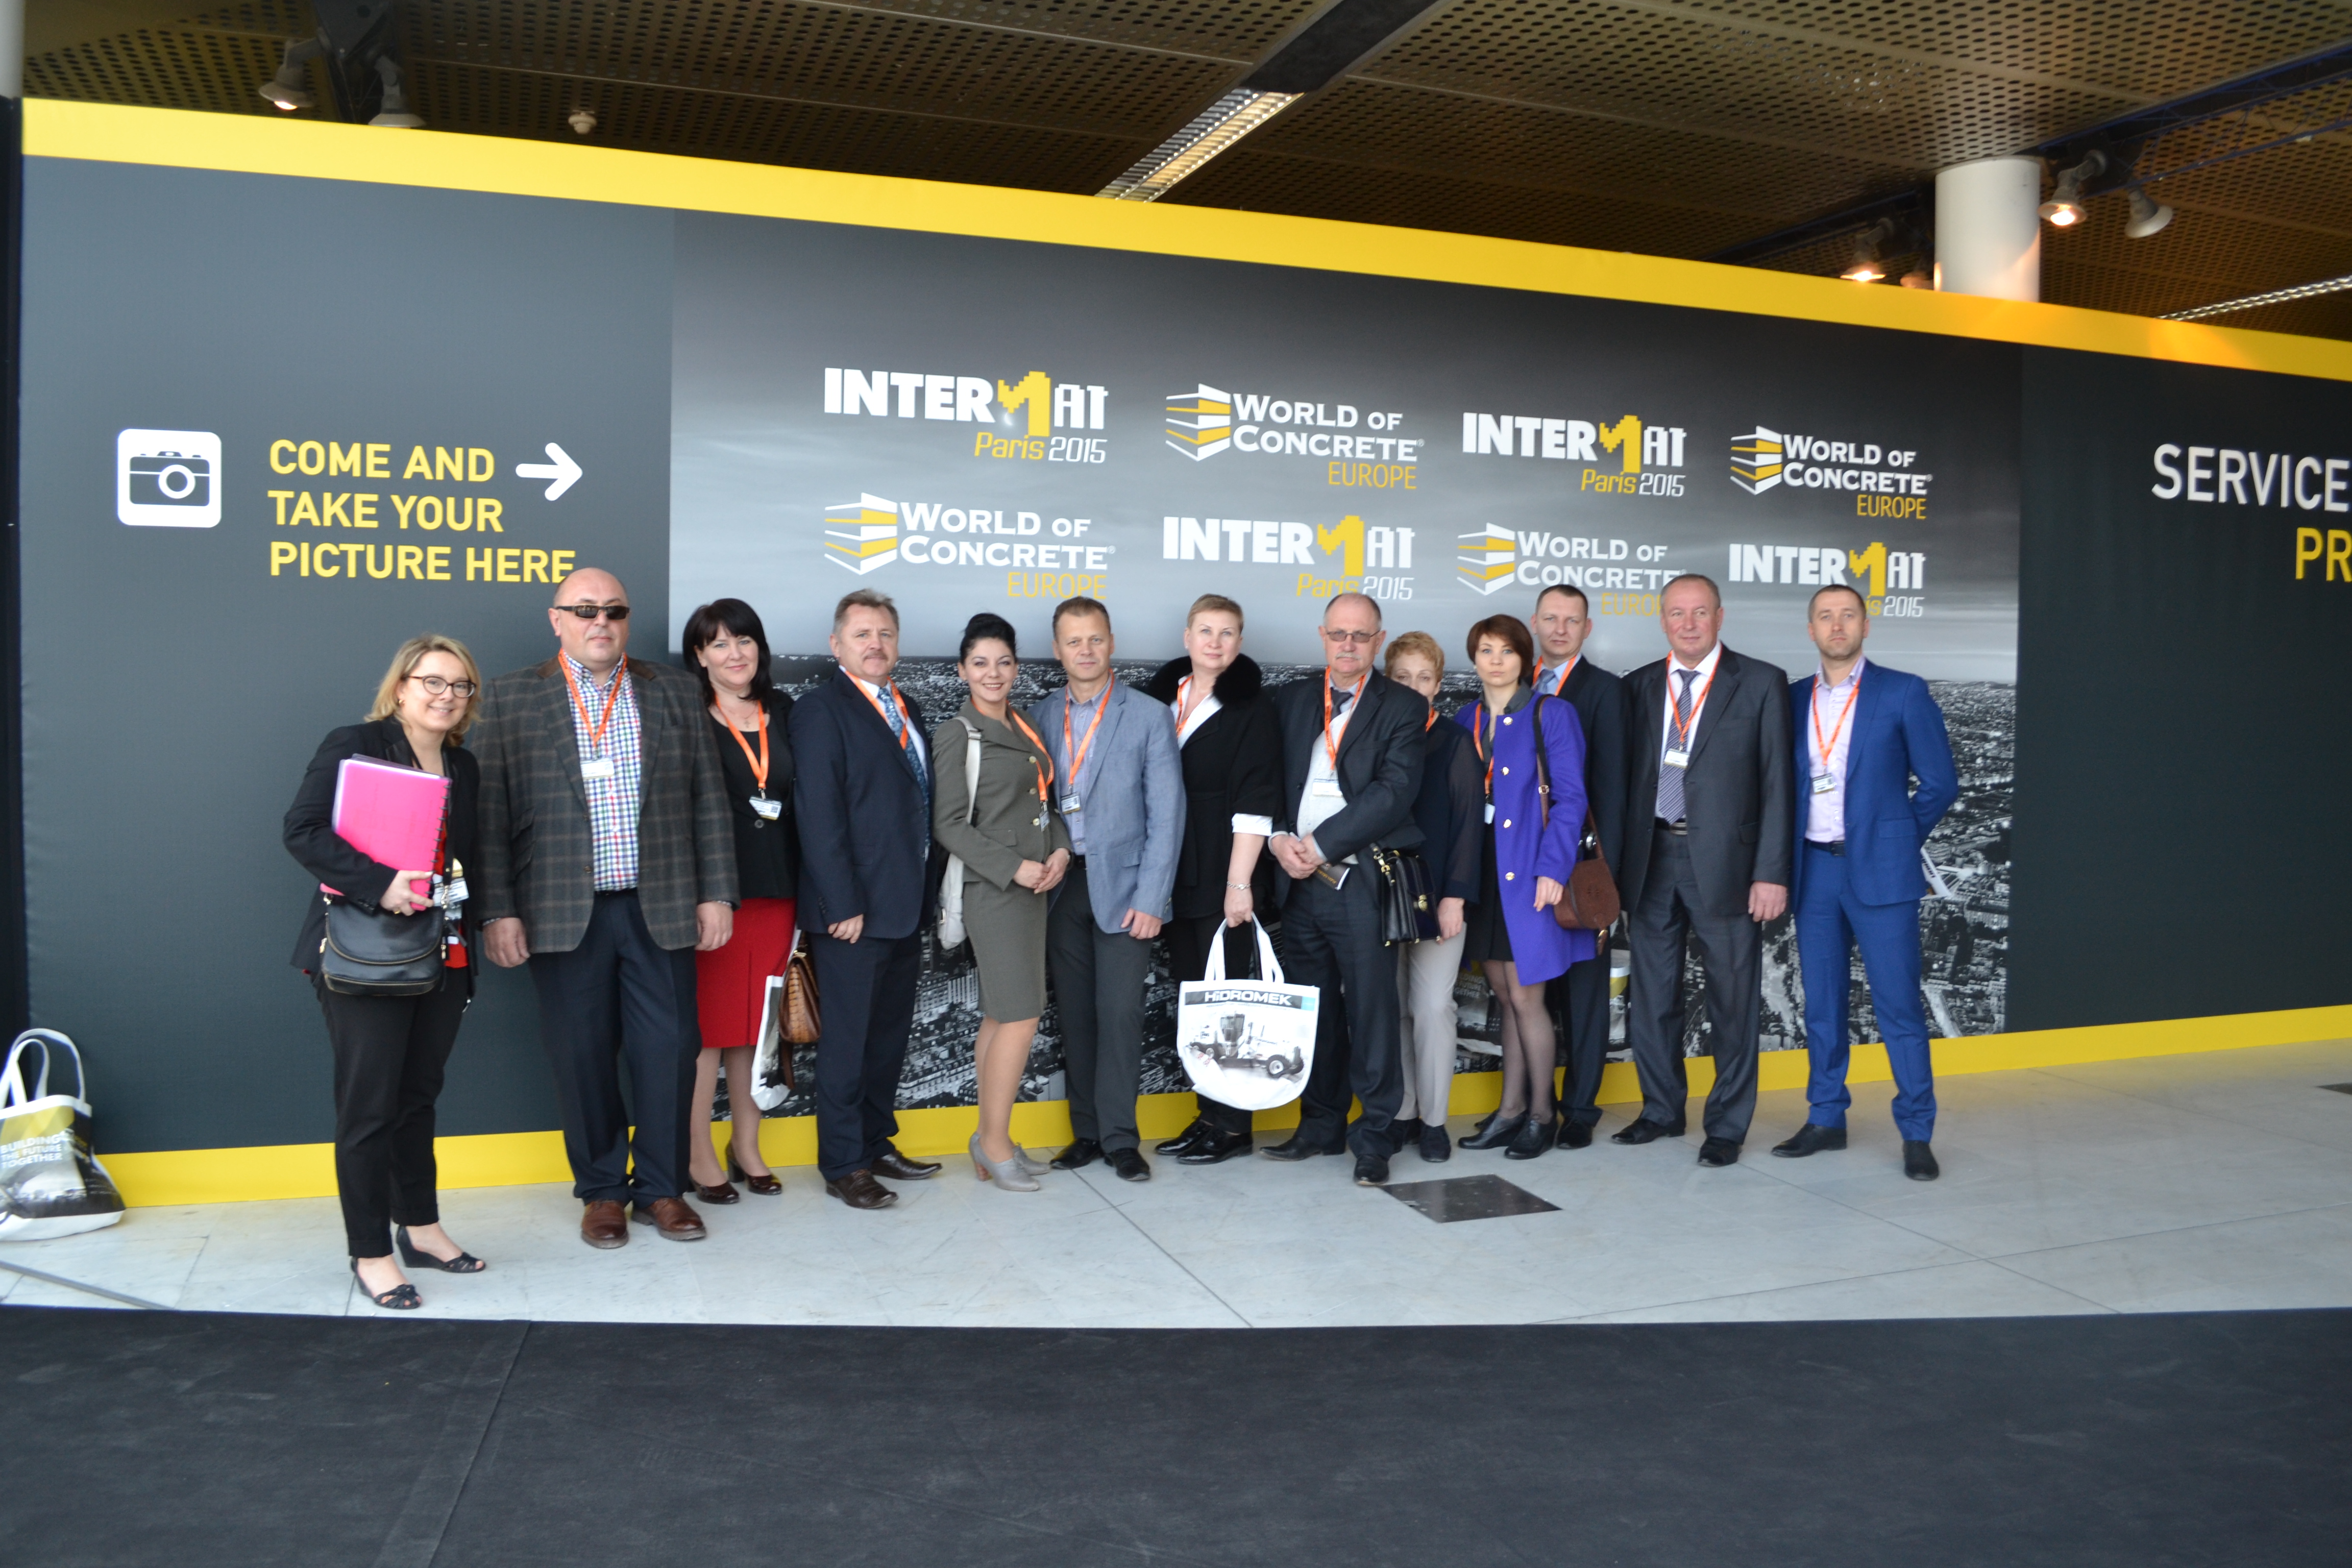 Семинар "Мир бетона"в рамках выставки Intermat 2015 в г. Париж, Франция, с 18 по 23 апреля 2015 г. 